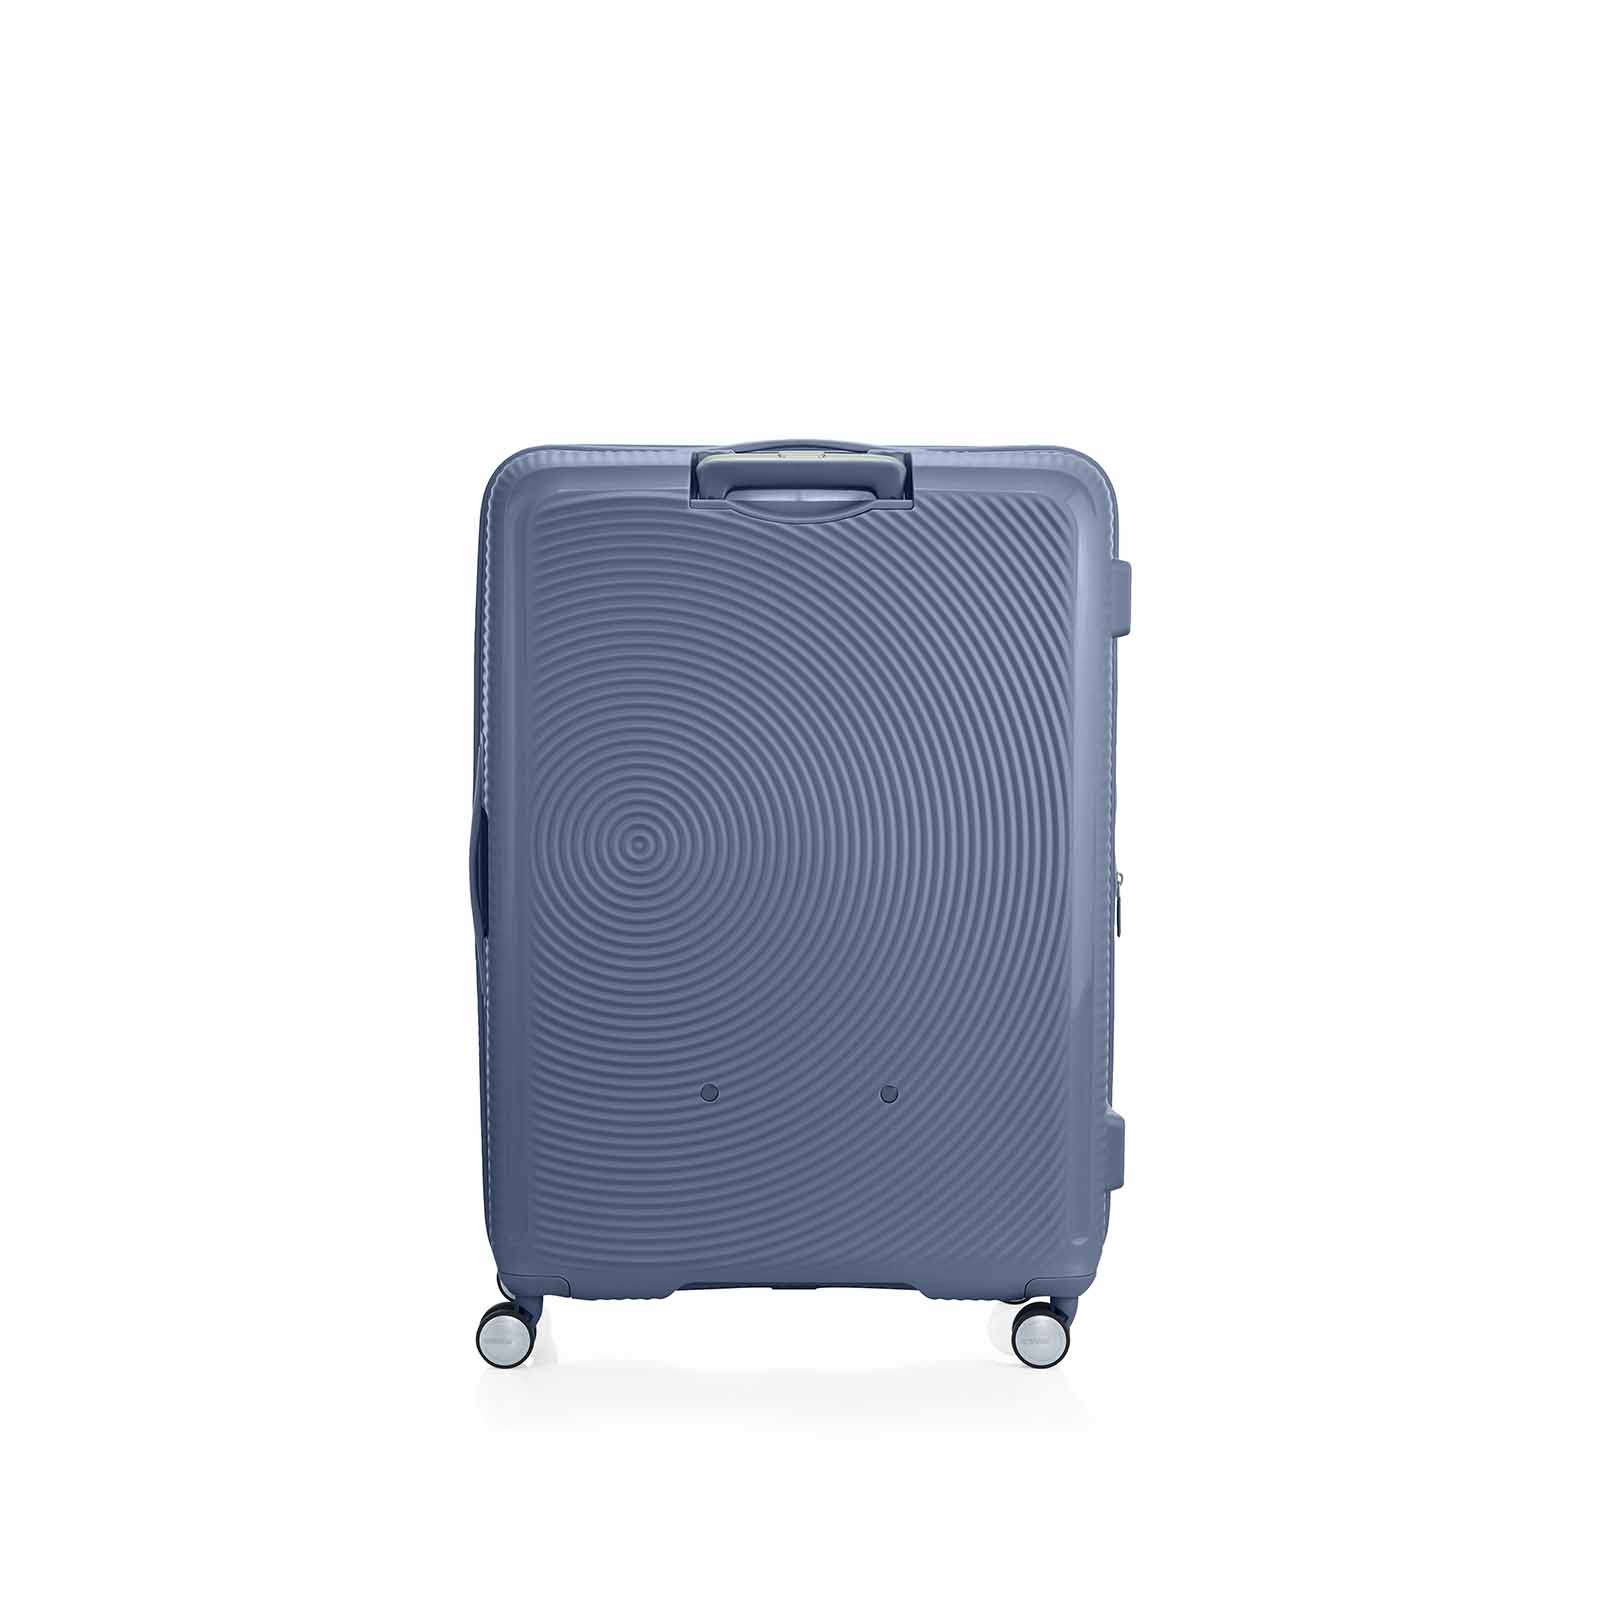 American-Tourister-Curio-2-80cm-Suitcase-Stone-Blue-Back